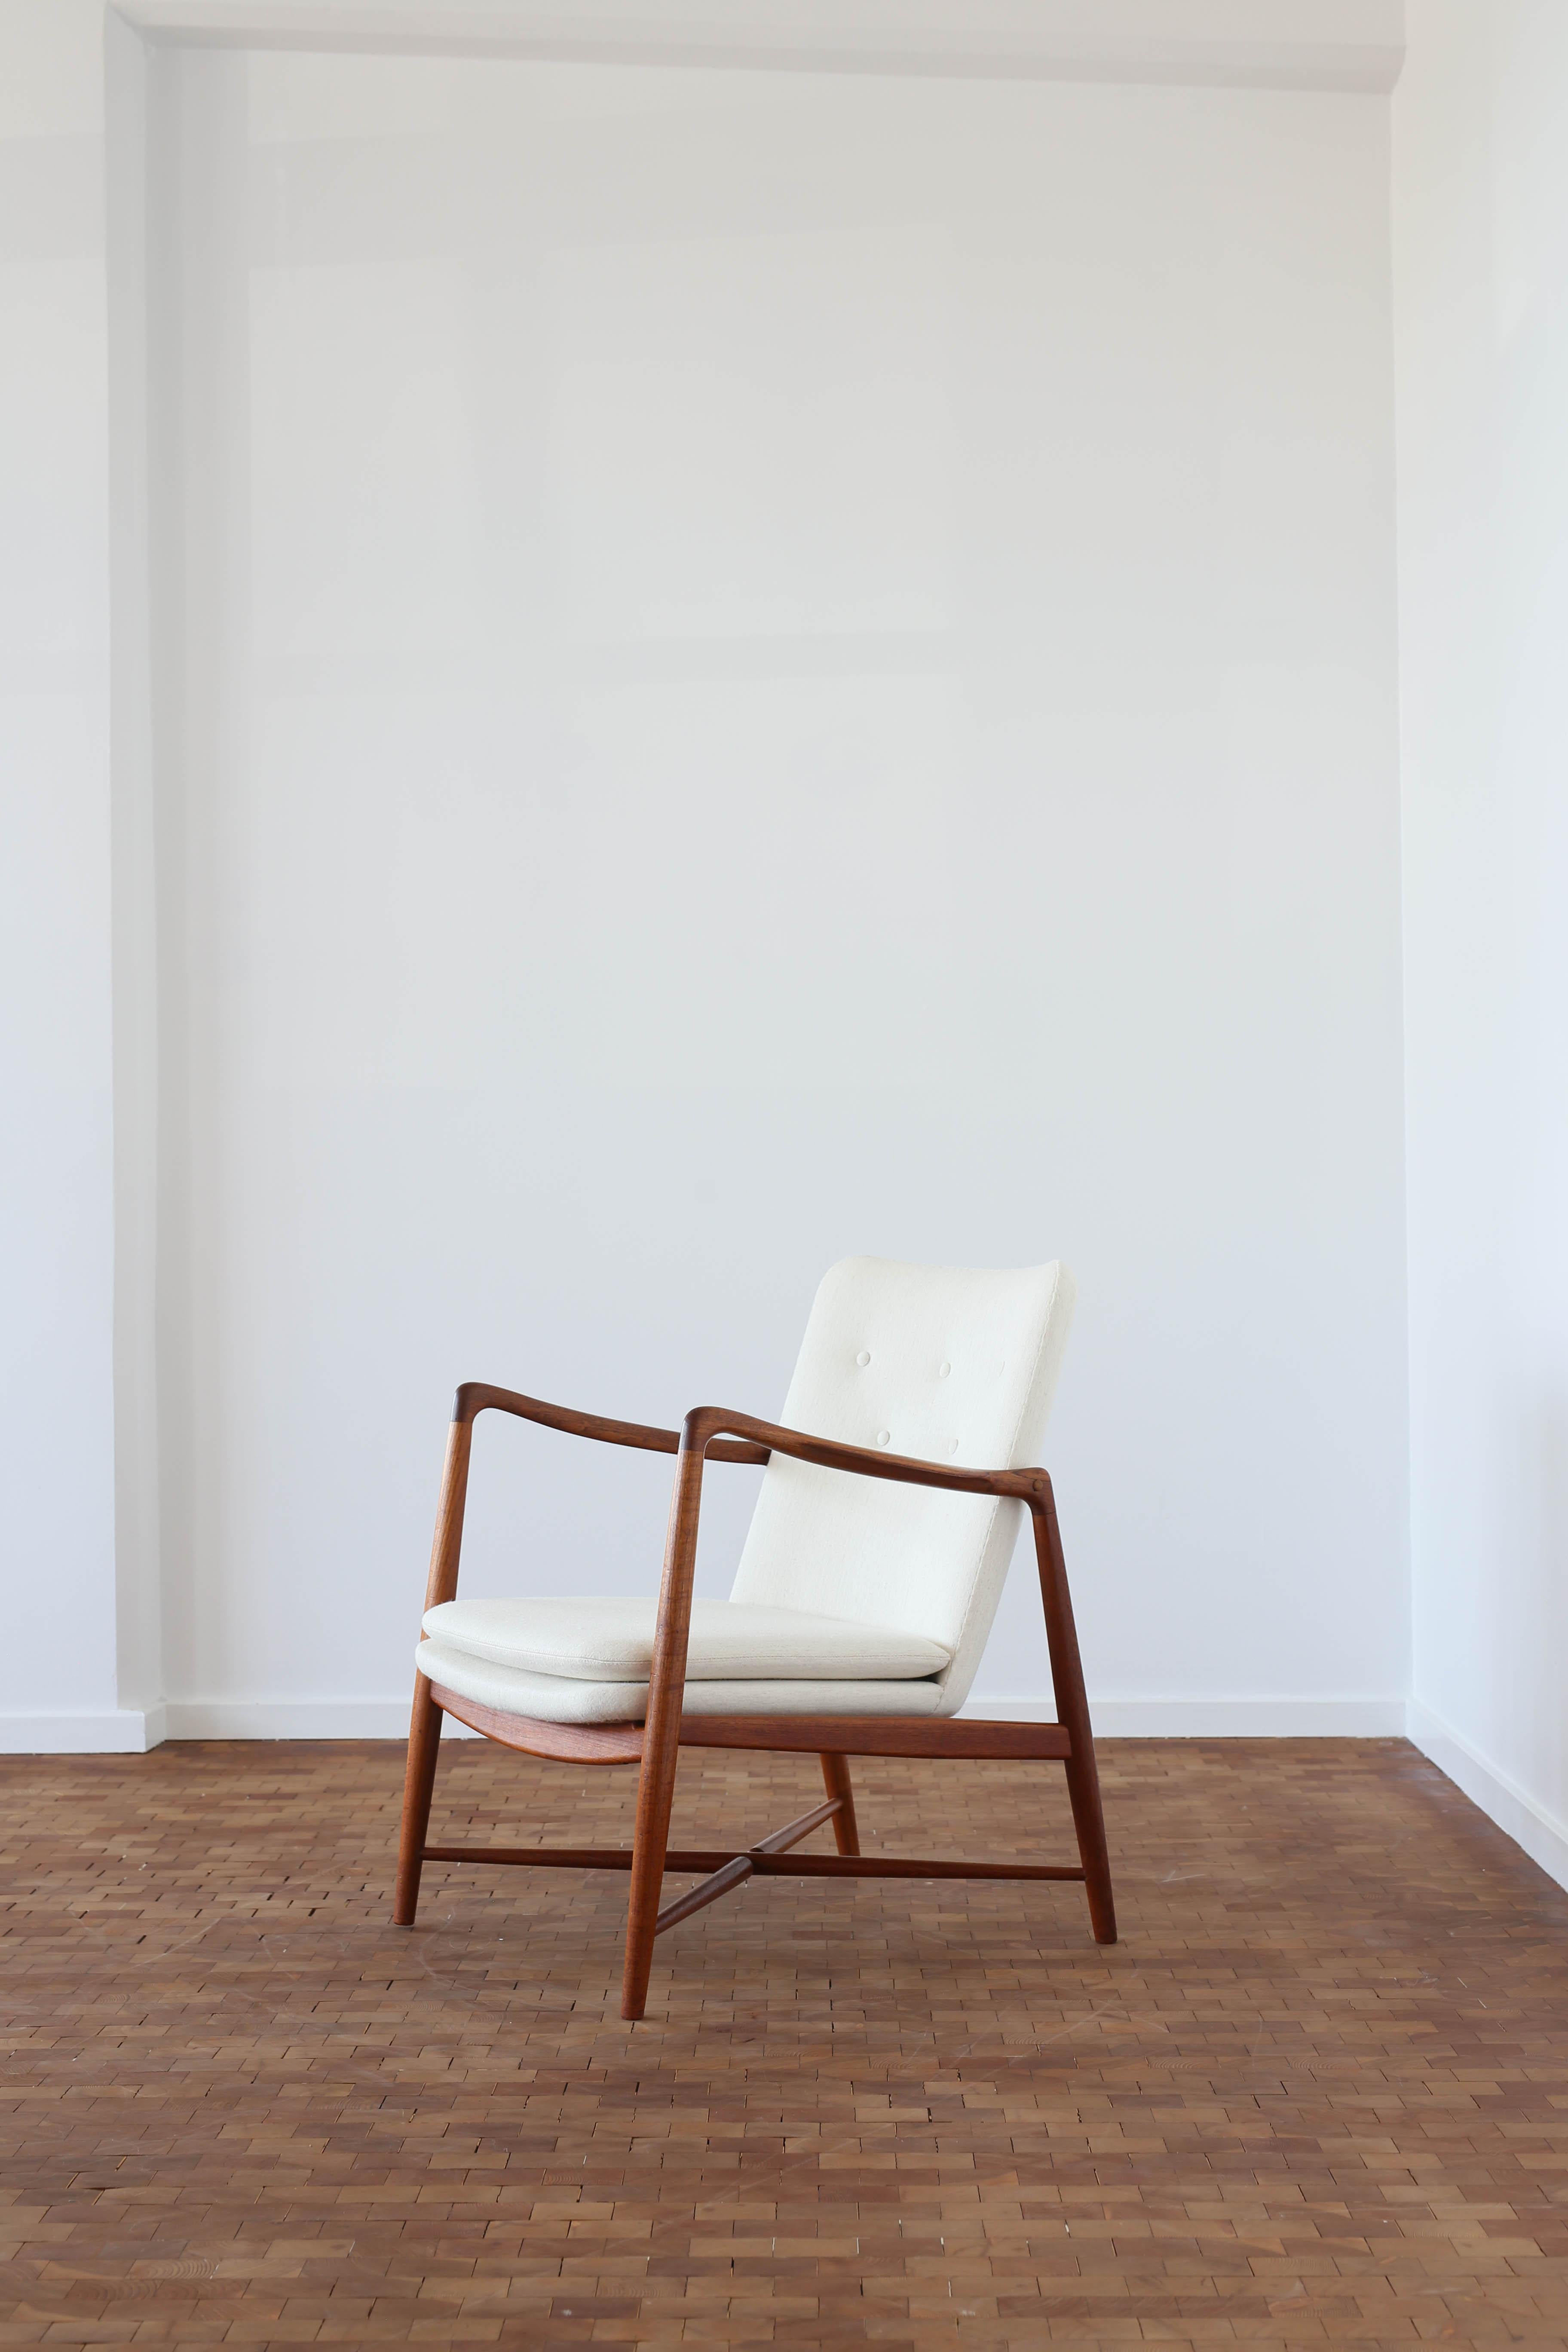 Fabric Finn Juhl Fireplace chair For Sale